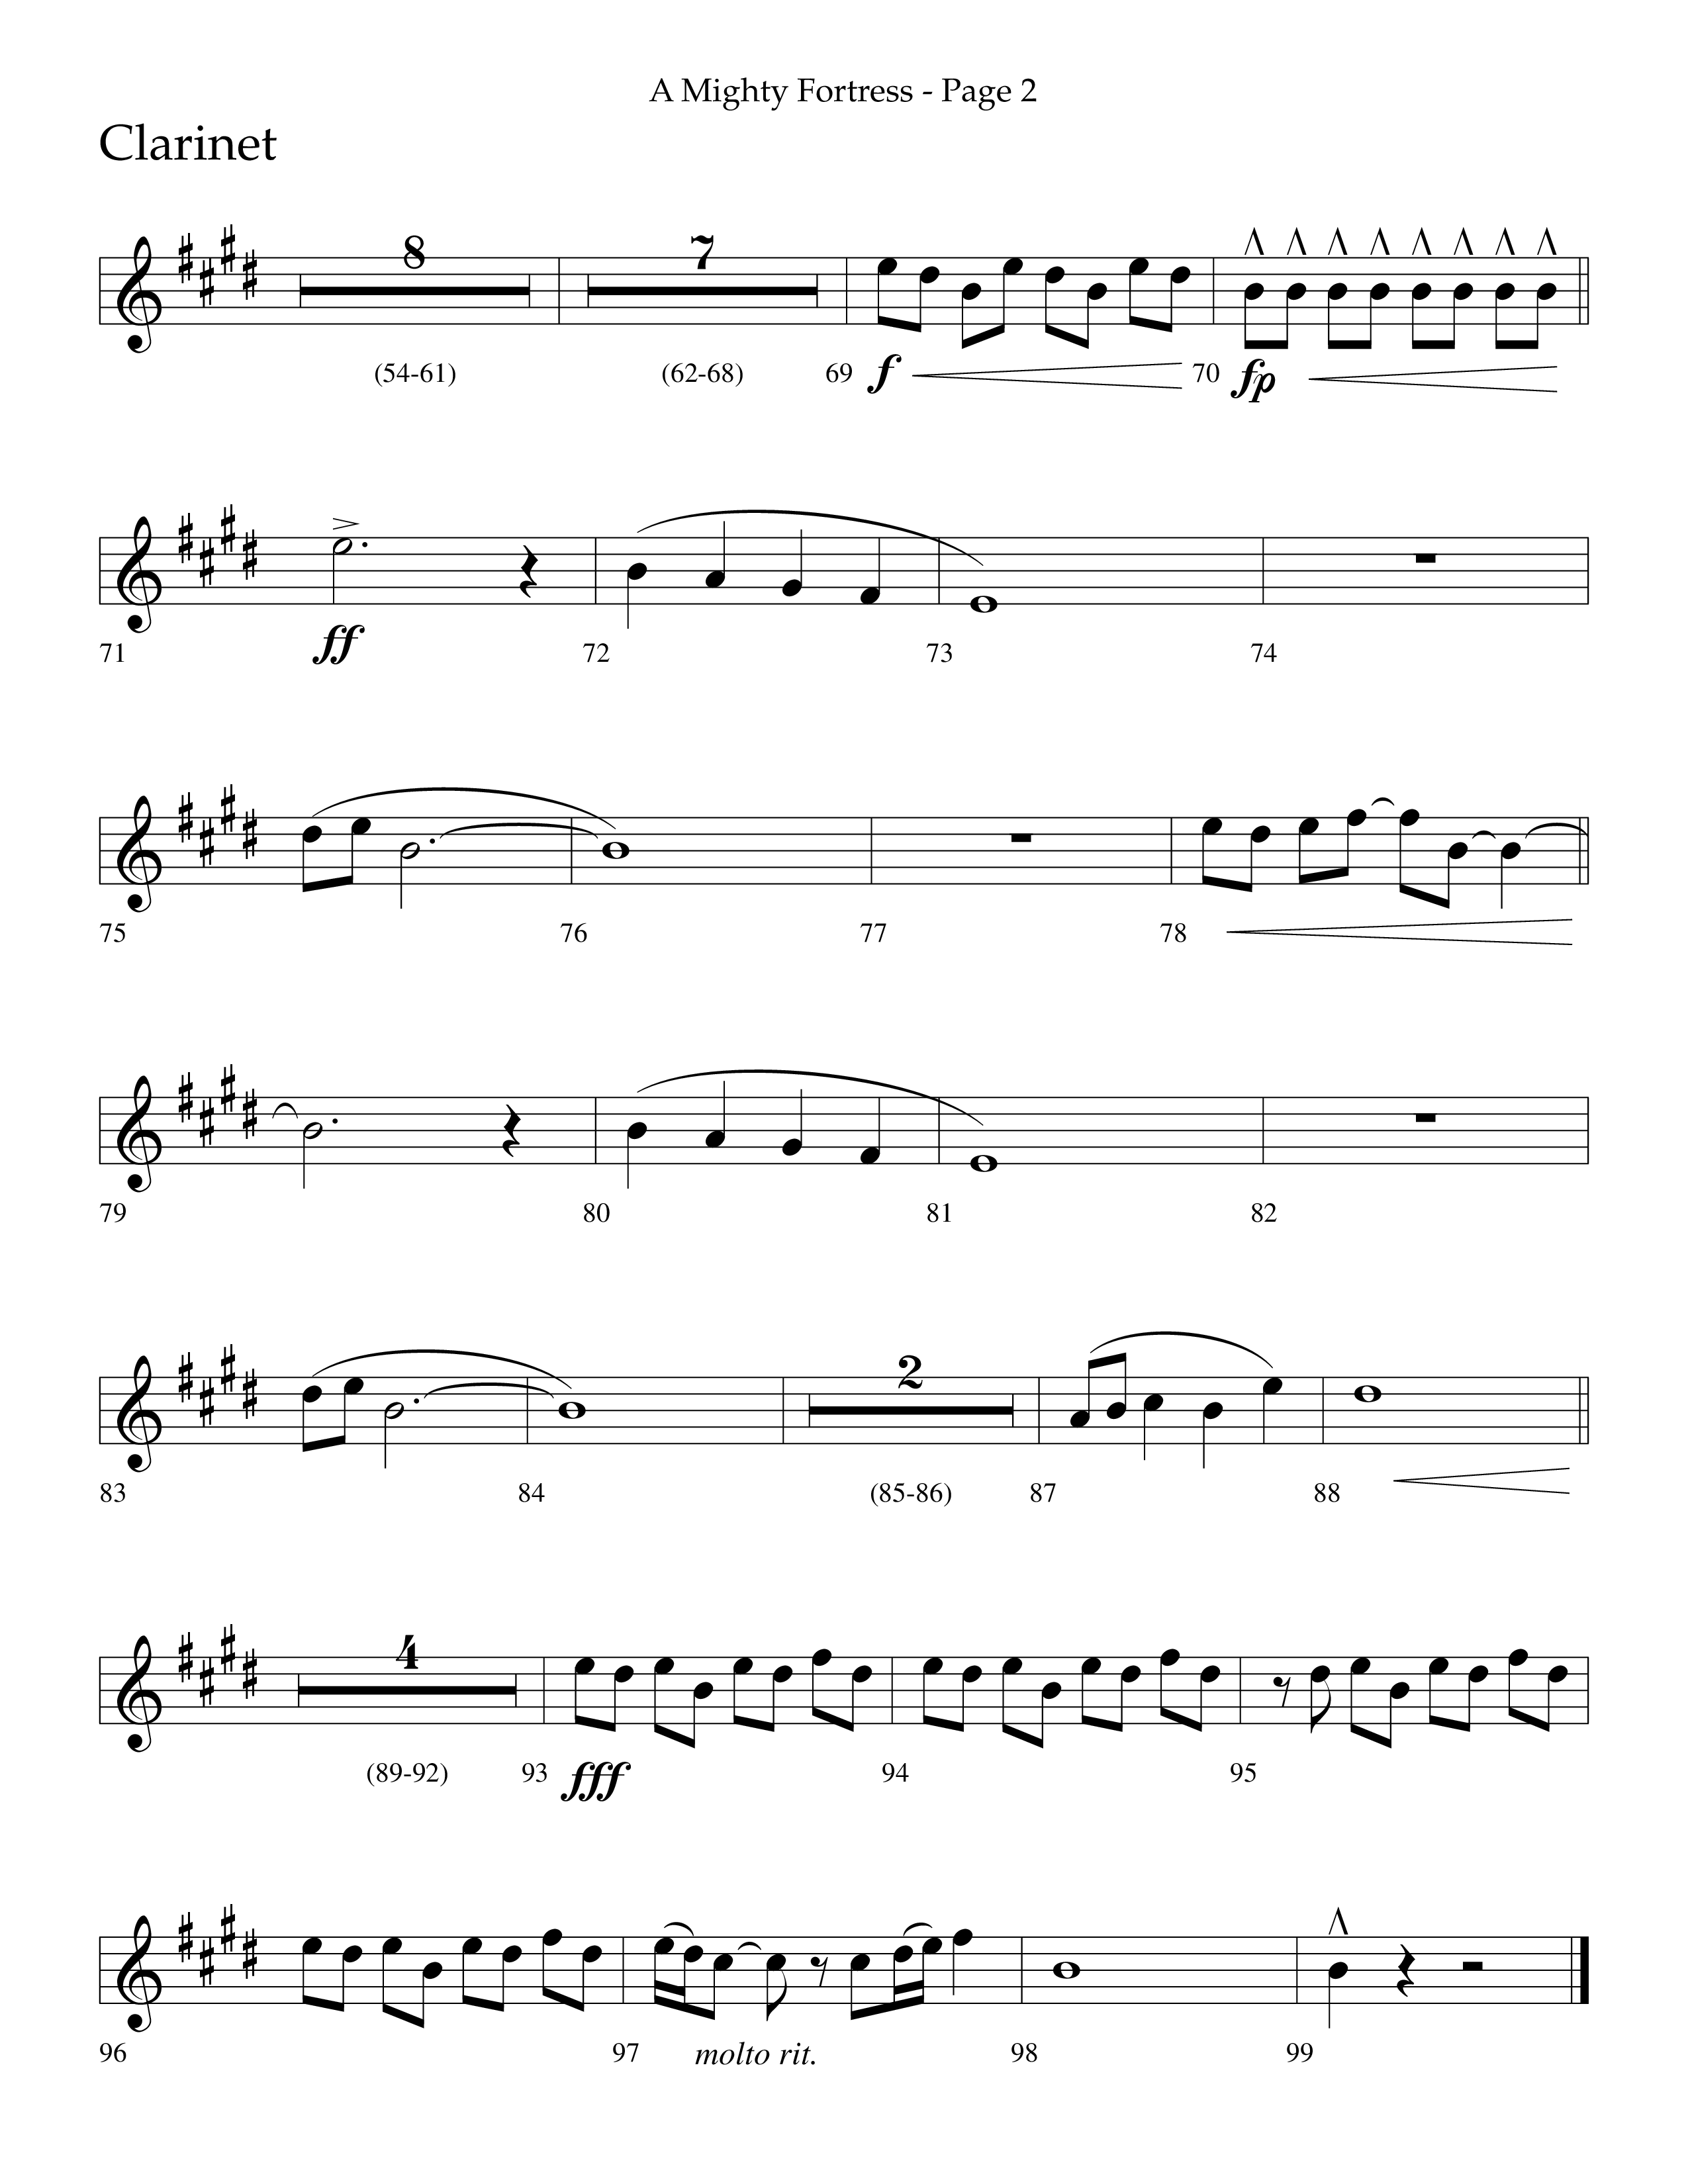 A Mighty Fortress (Choral Anthem SATB) Clarinet 1/2 (Lifeway Choral / Arr. Cliff Duren)